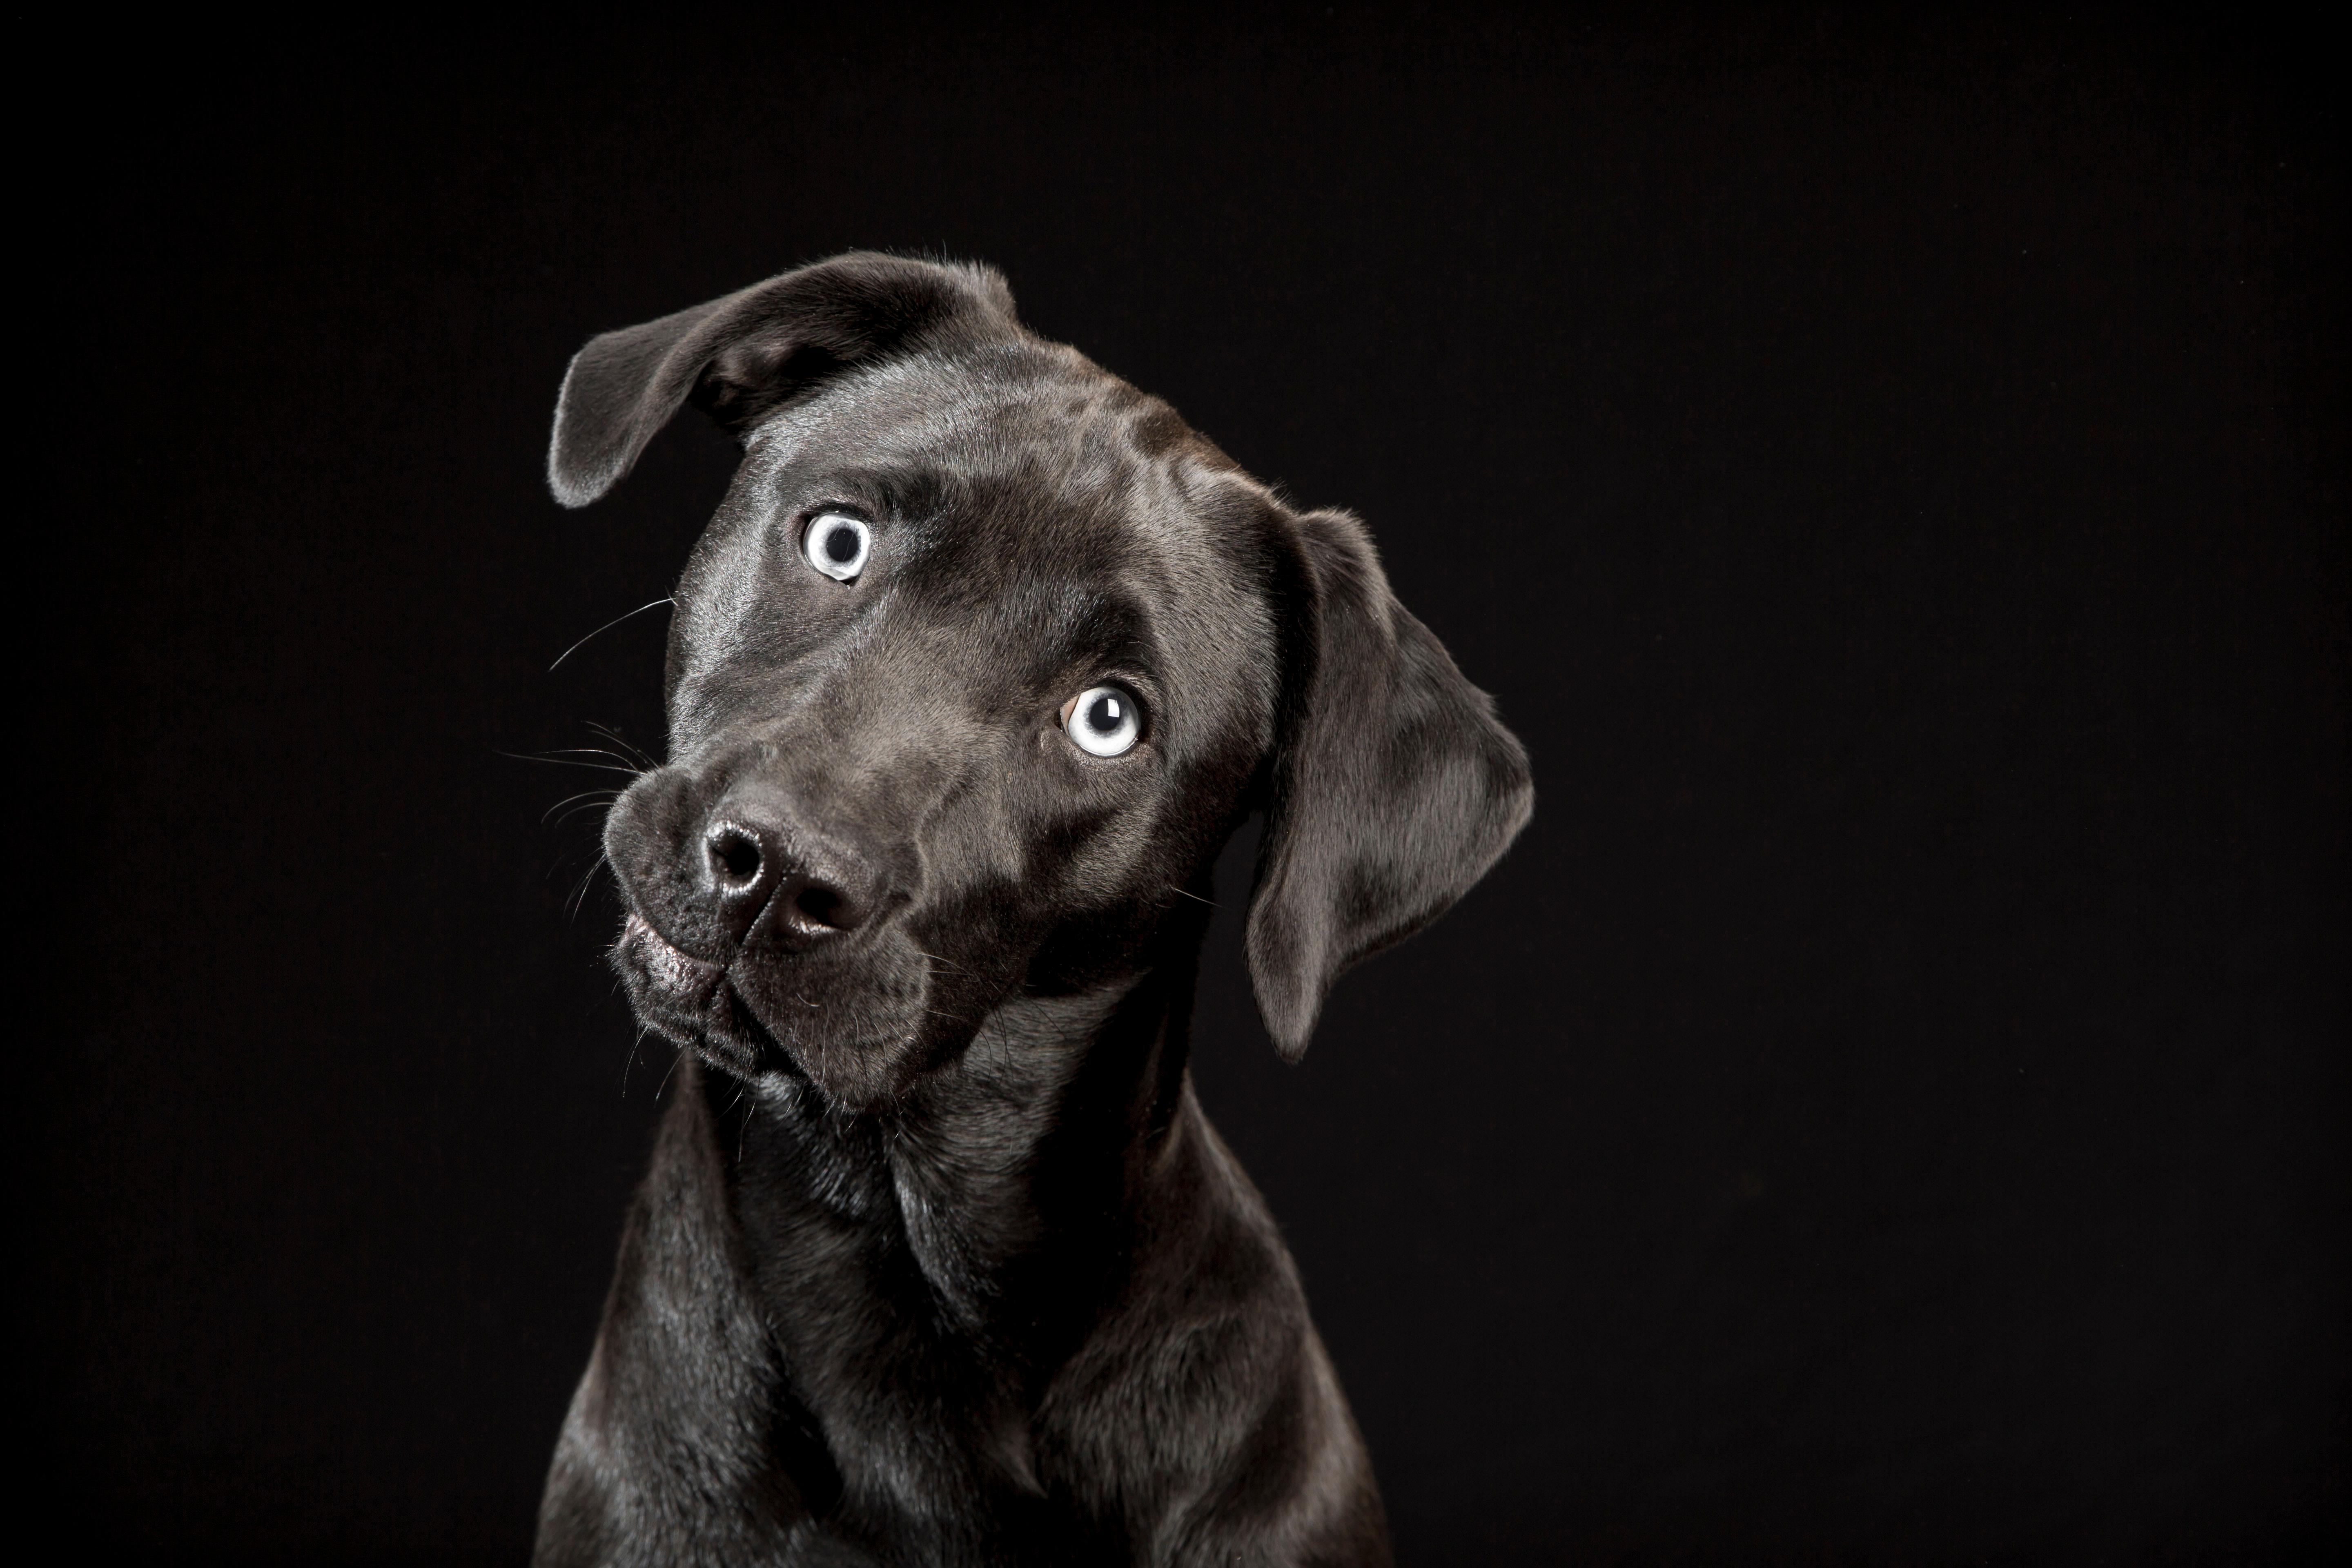 Amazon.com: The Black Dogs Project: Extraordinary Black ...